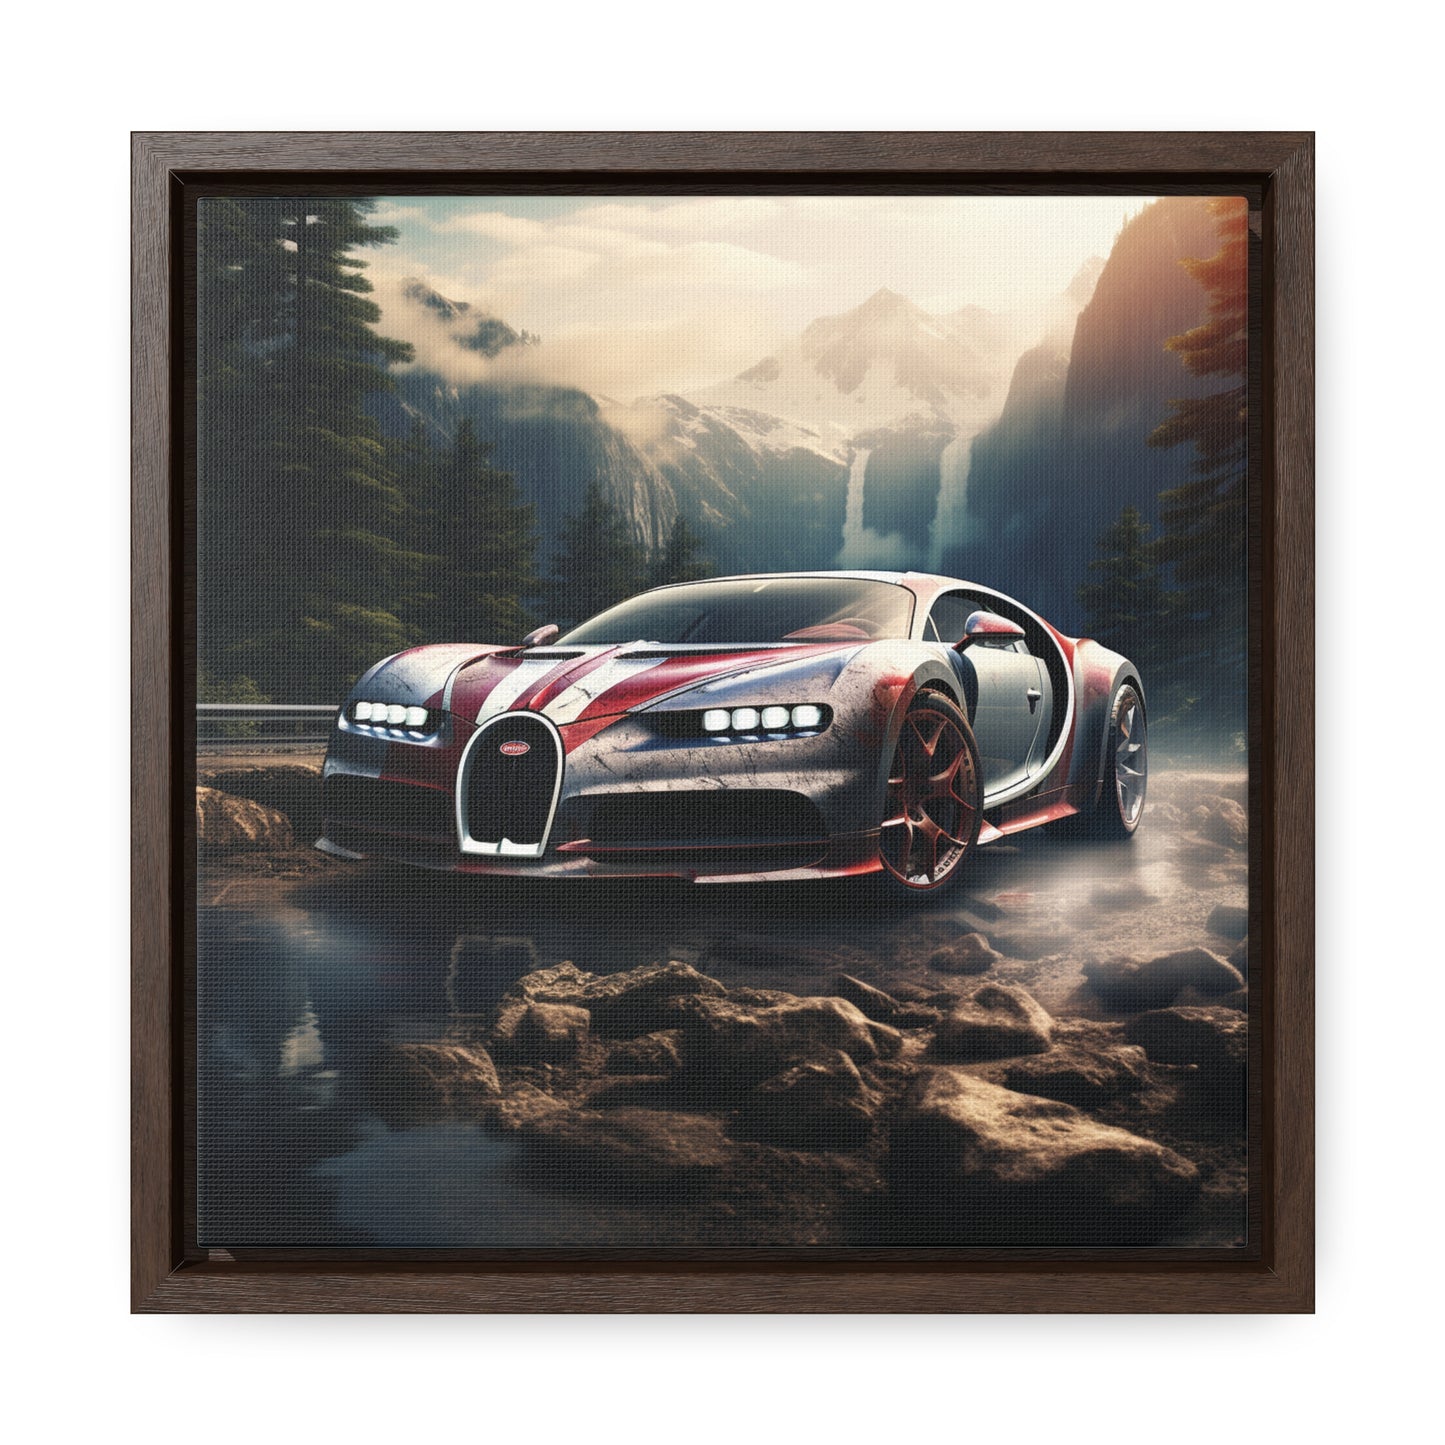 Gallery Canvas Wraps, Square Frame Bugatti Waterfall 4